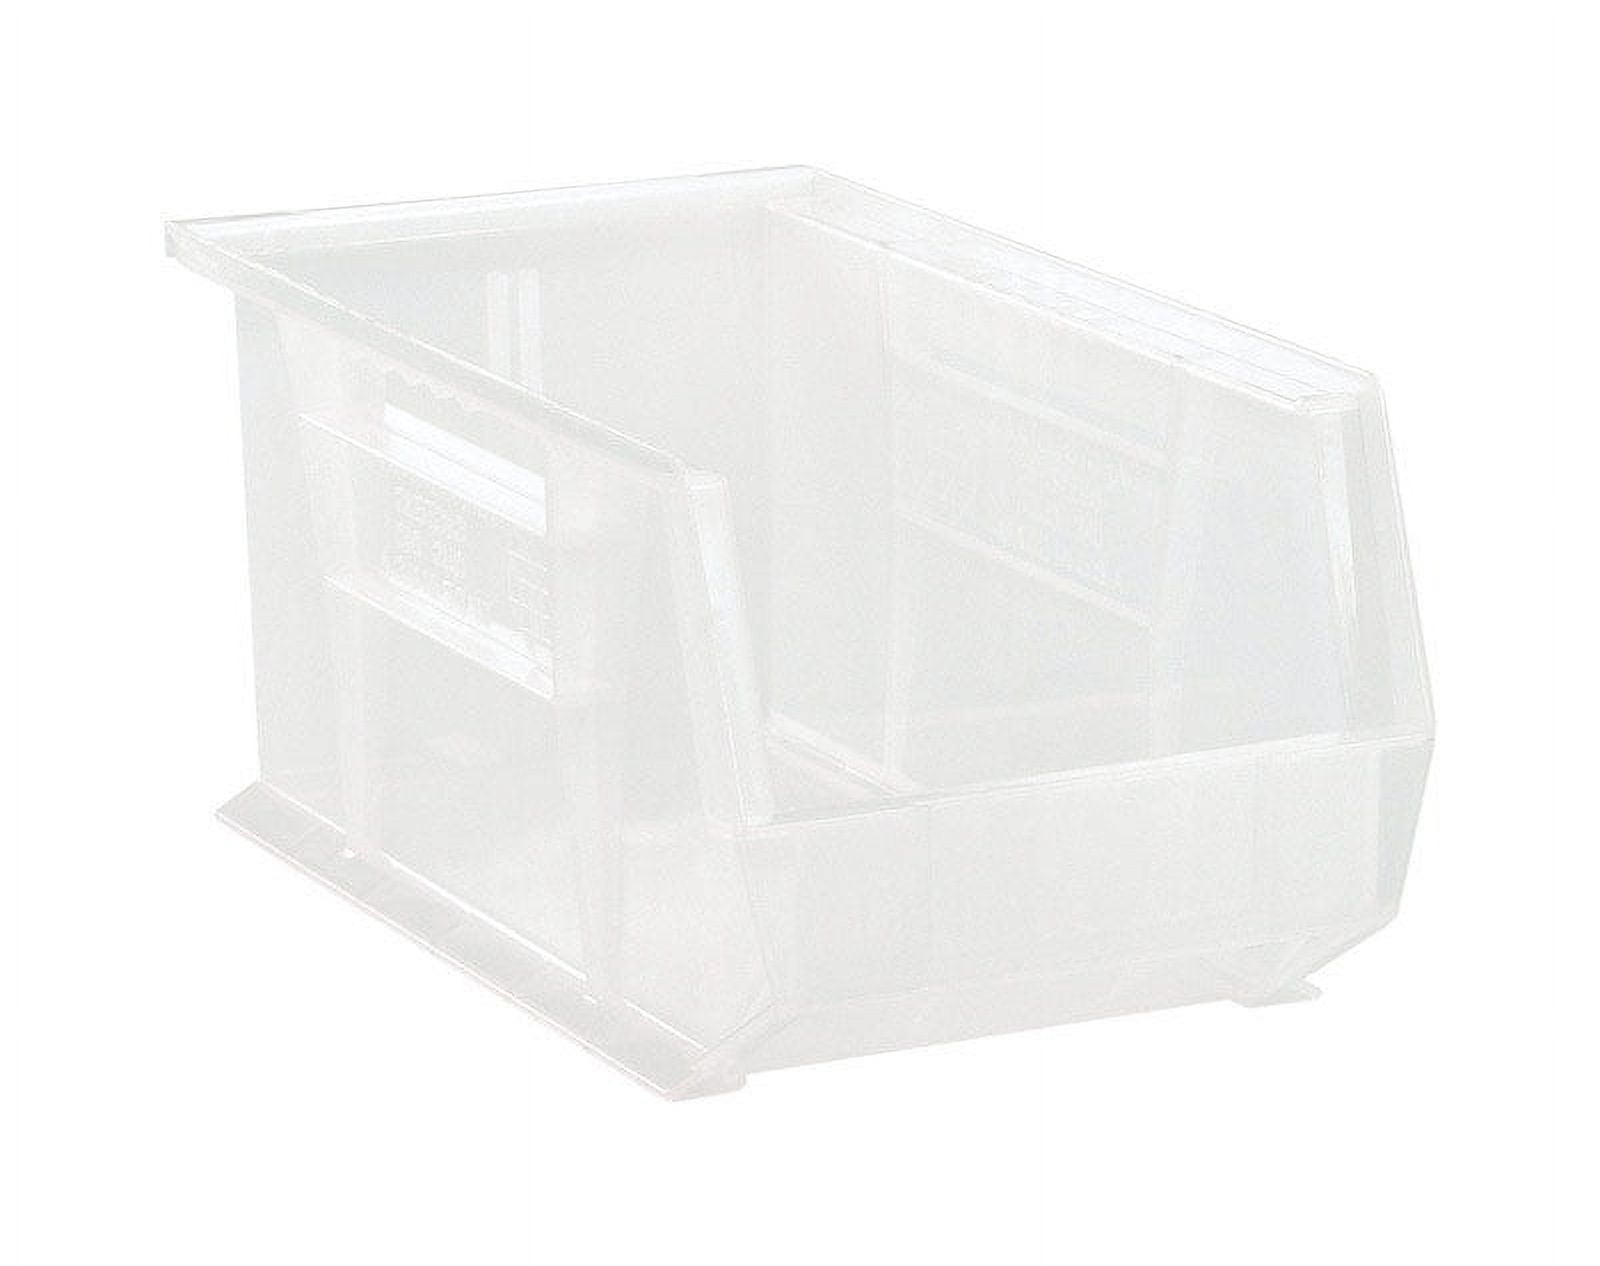 Really Useful Box 17.31 x 28 x 12.25 in. Snap-Lid Storage Bin Clear - 16.9 Gal